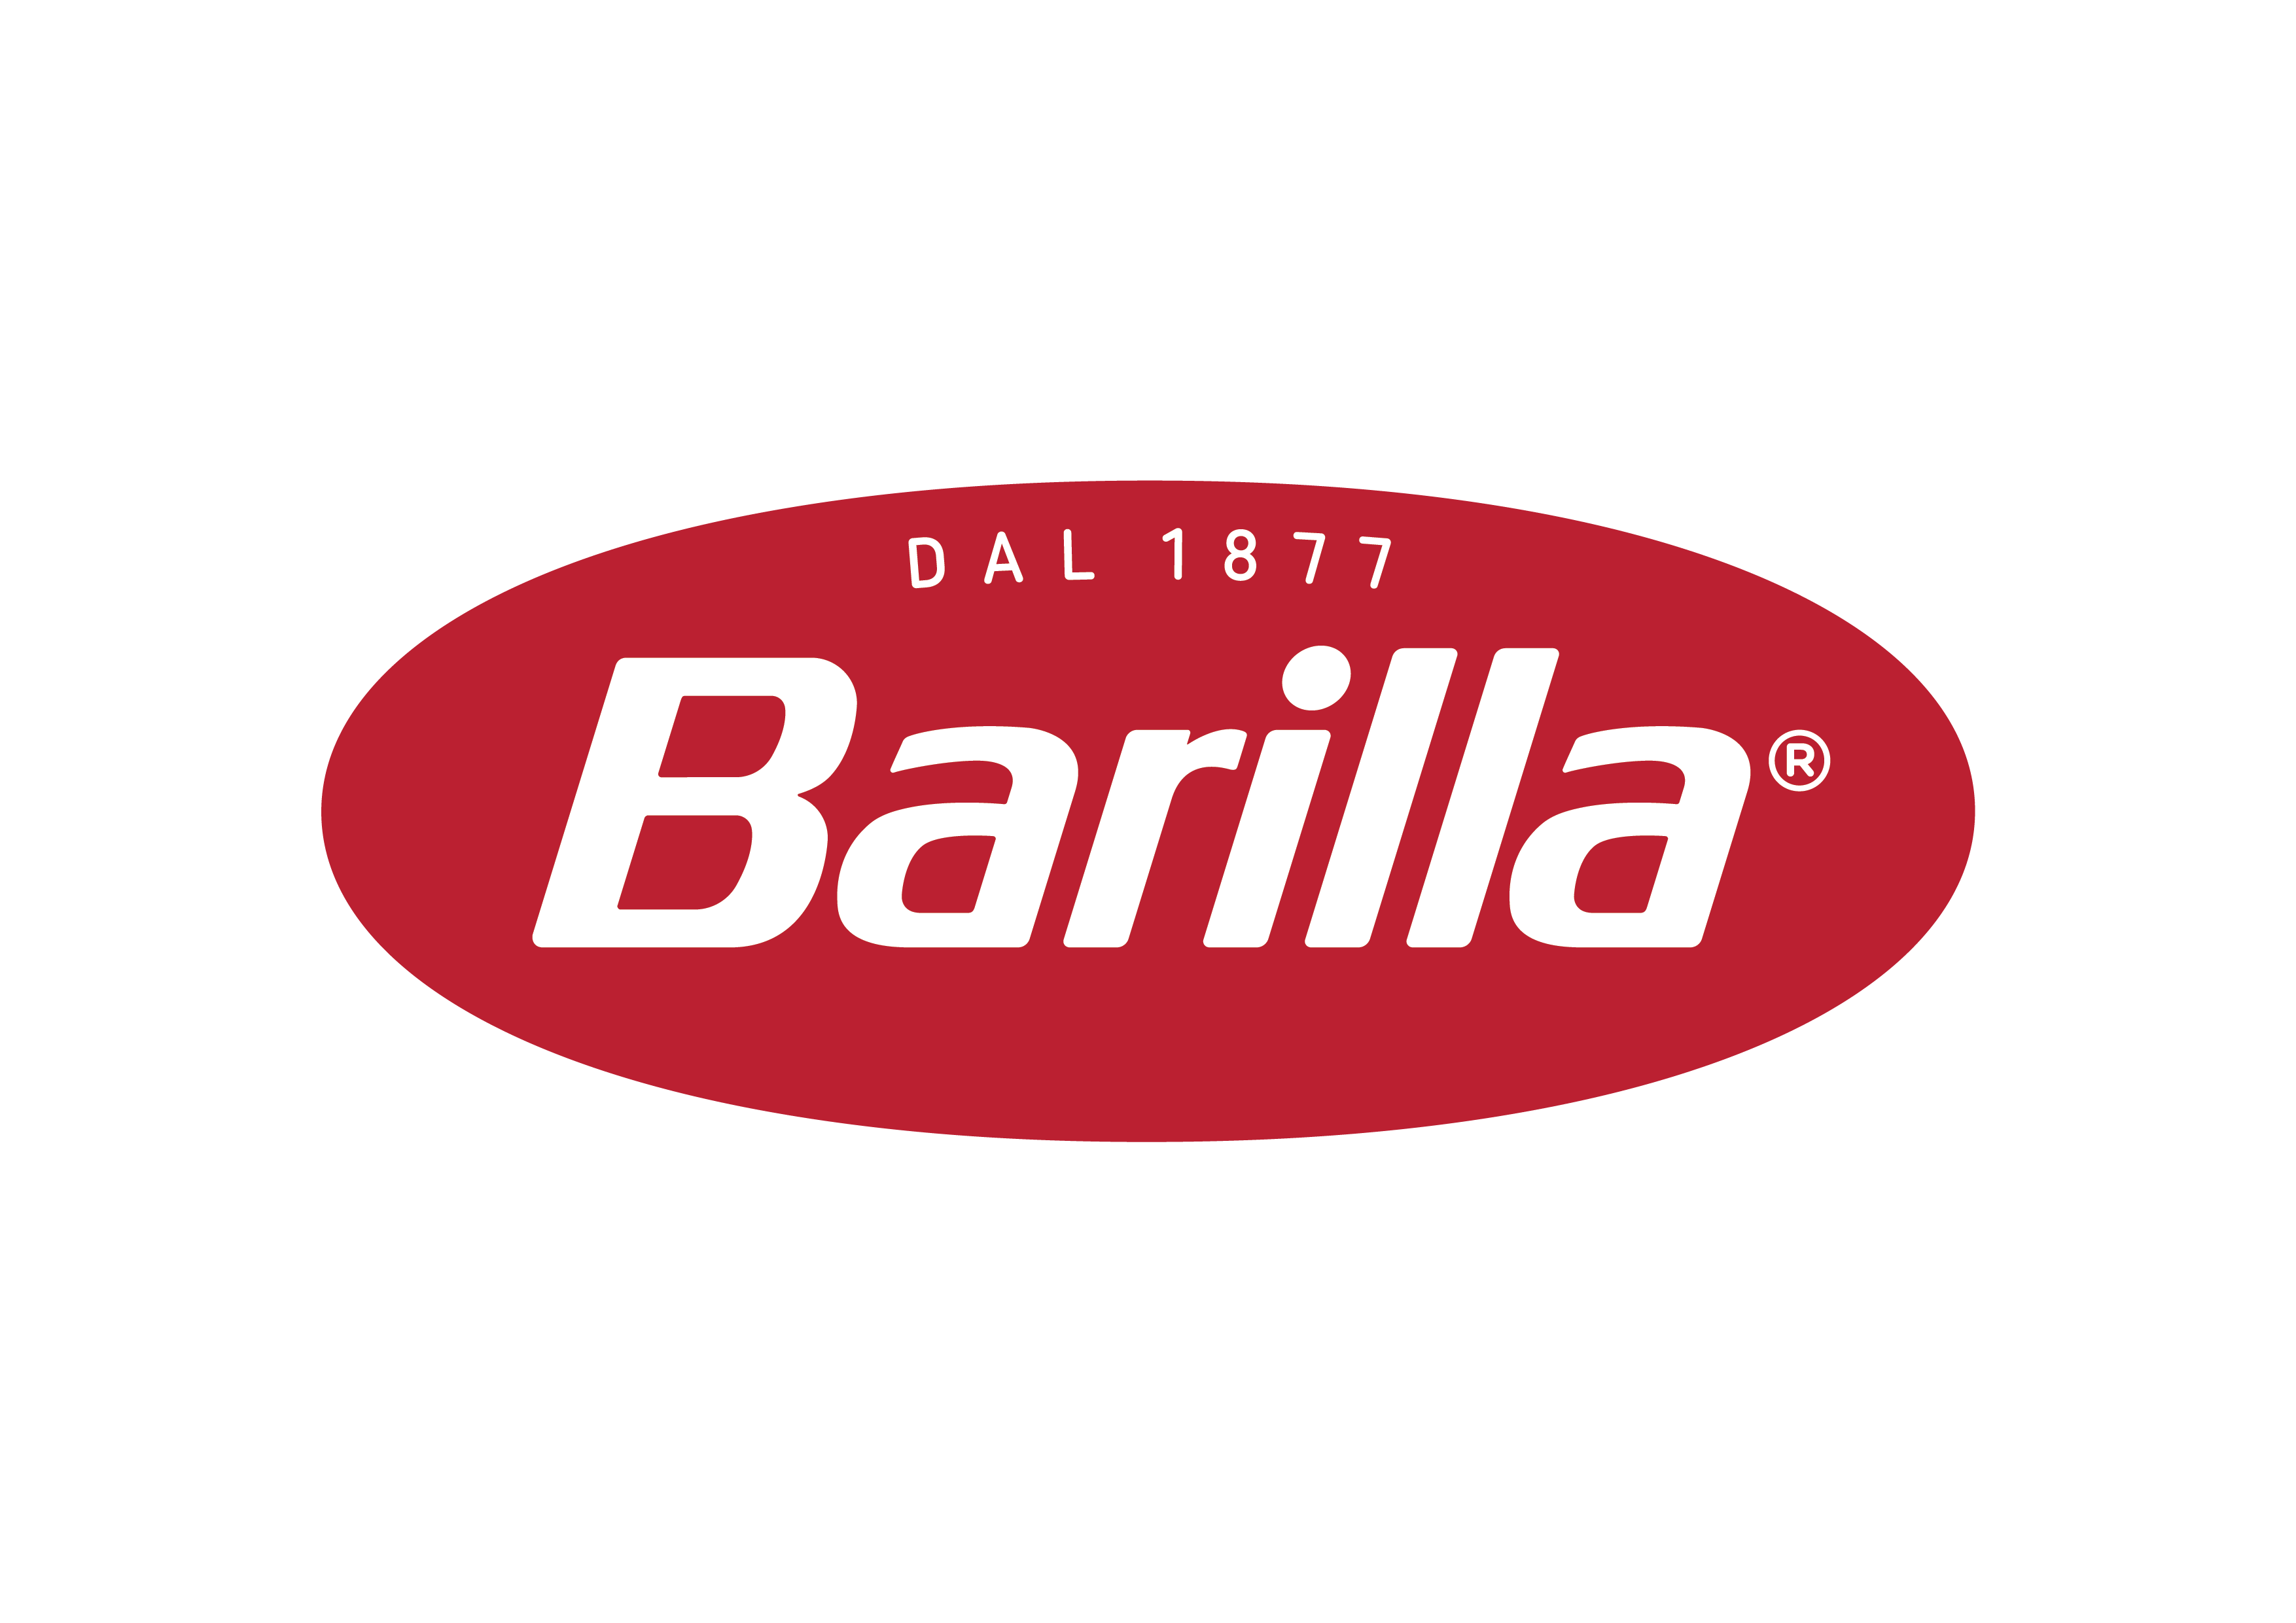 BARILLA Italian Pasta Lasagne 500g – Federated Distributors, Inc.